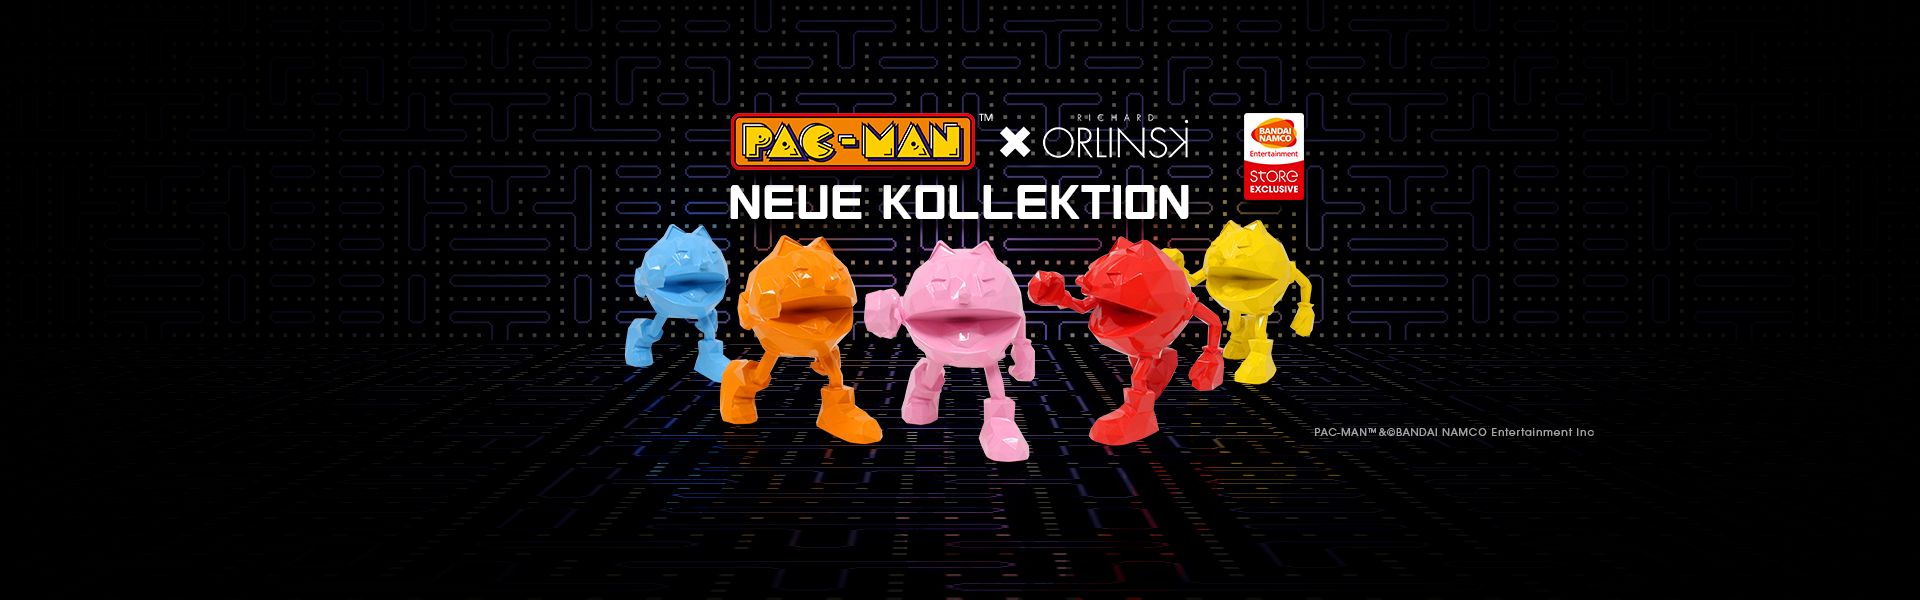 PAC-MAN x ORLINSKI : Neue Kollektion